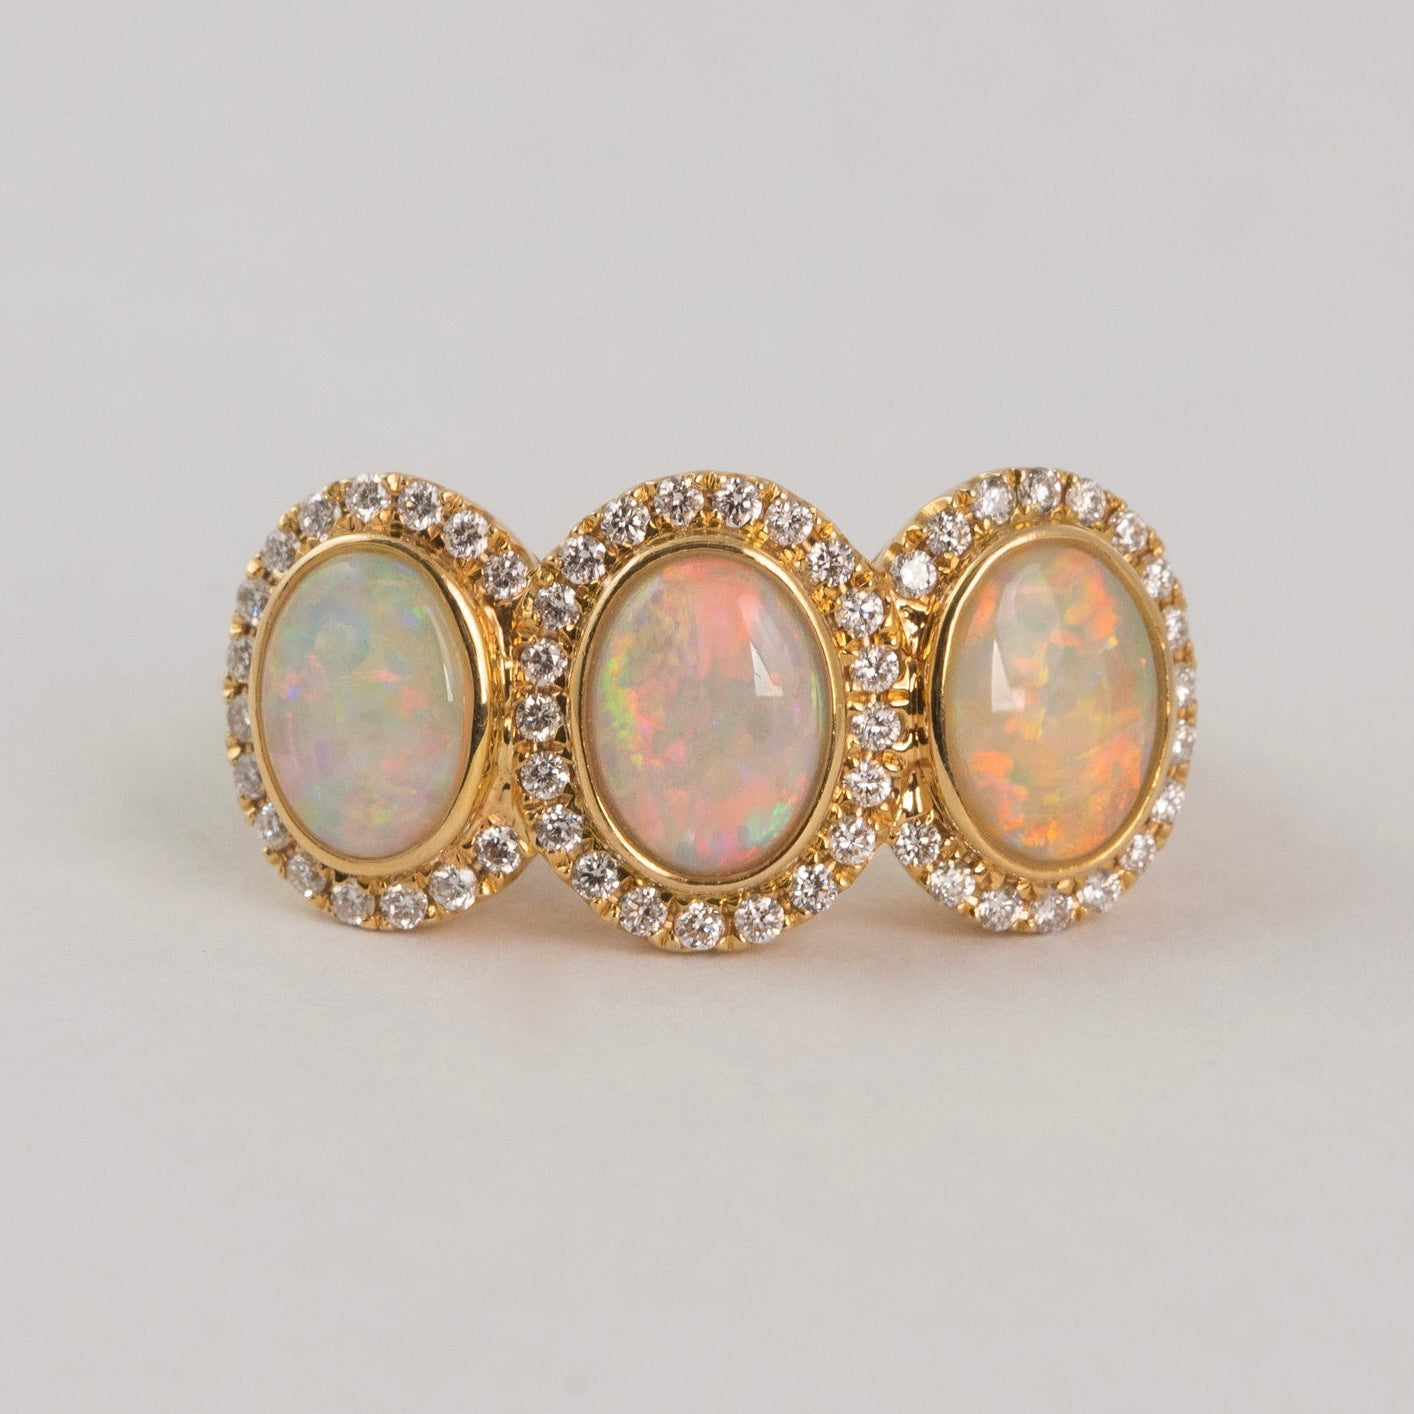 The Trinity Opal Ring